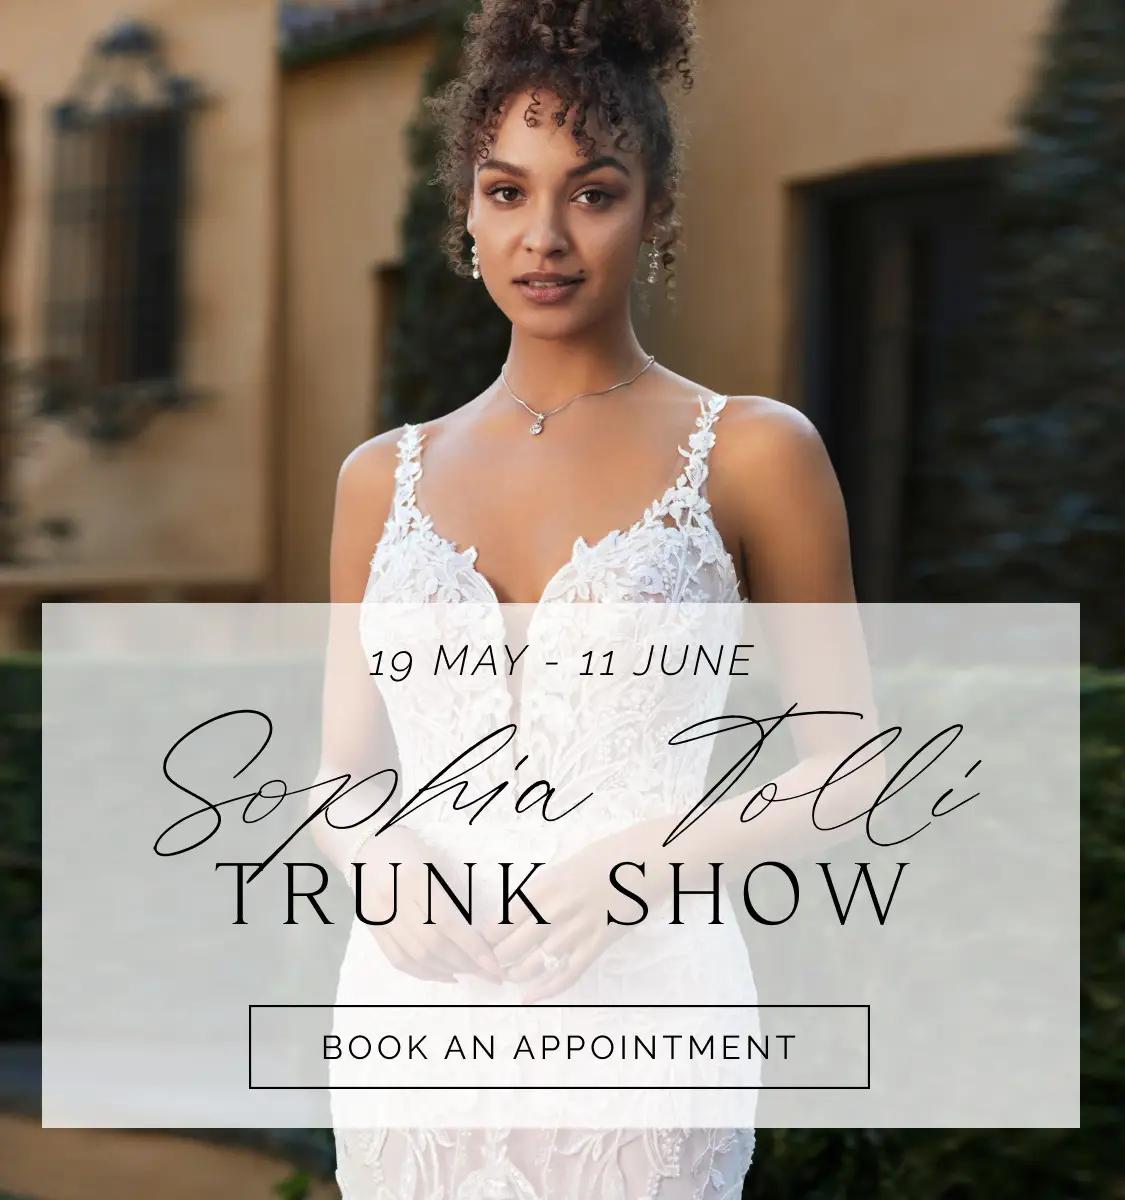 "Sophia Tolli Trunk Show" banner for mobile